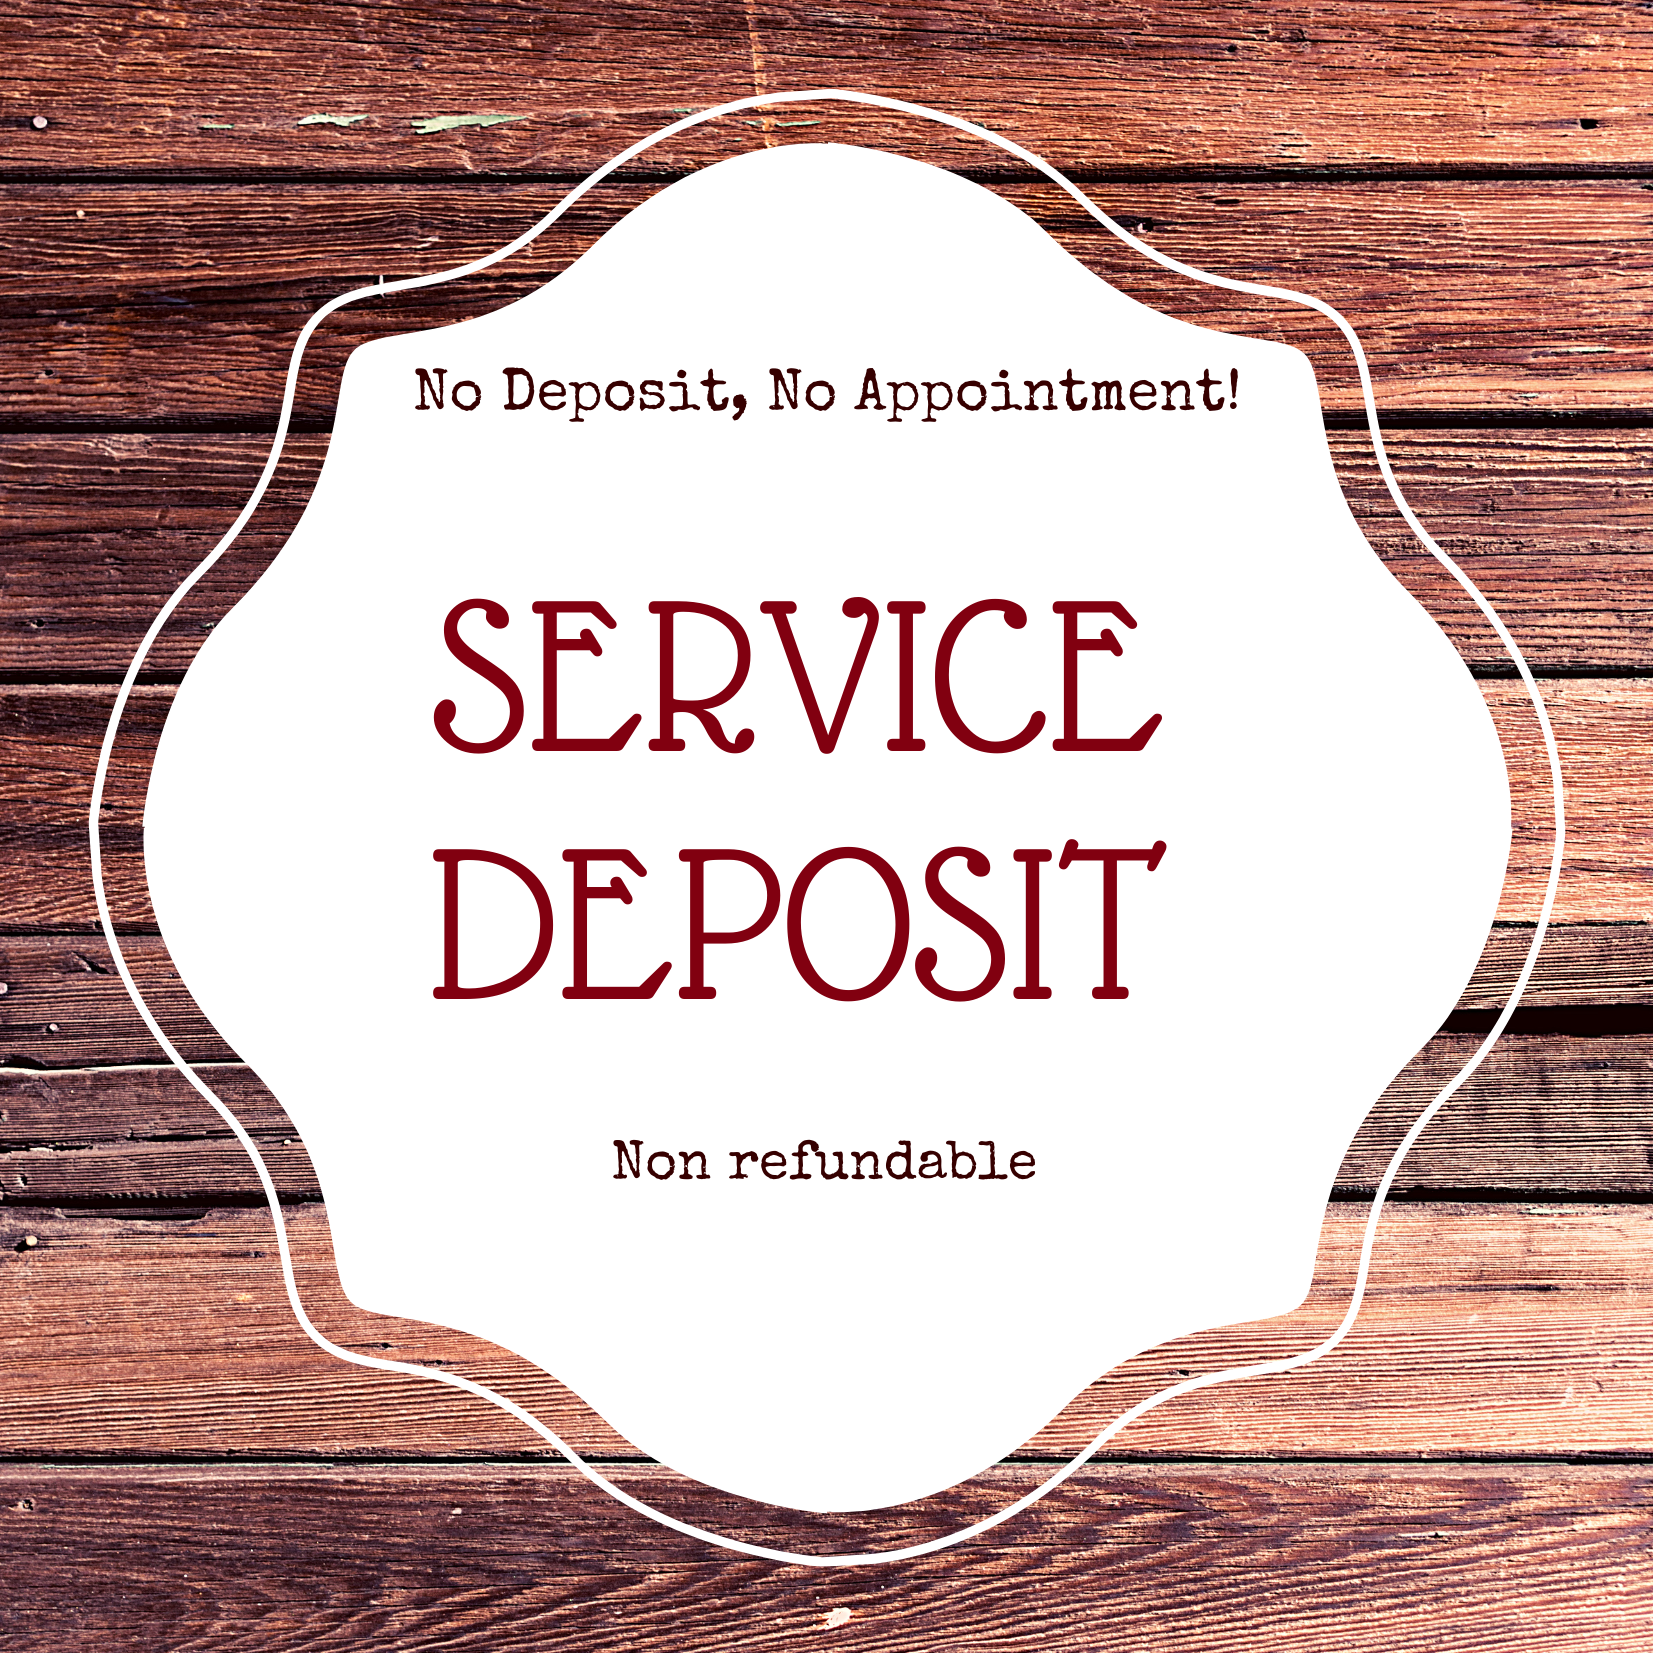 Service Deposit 50% Of Services